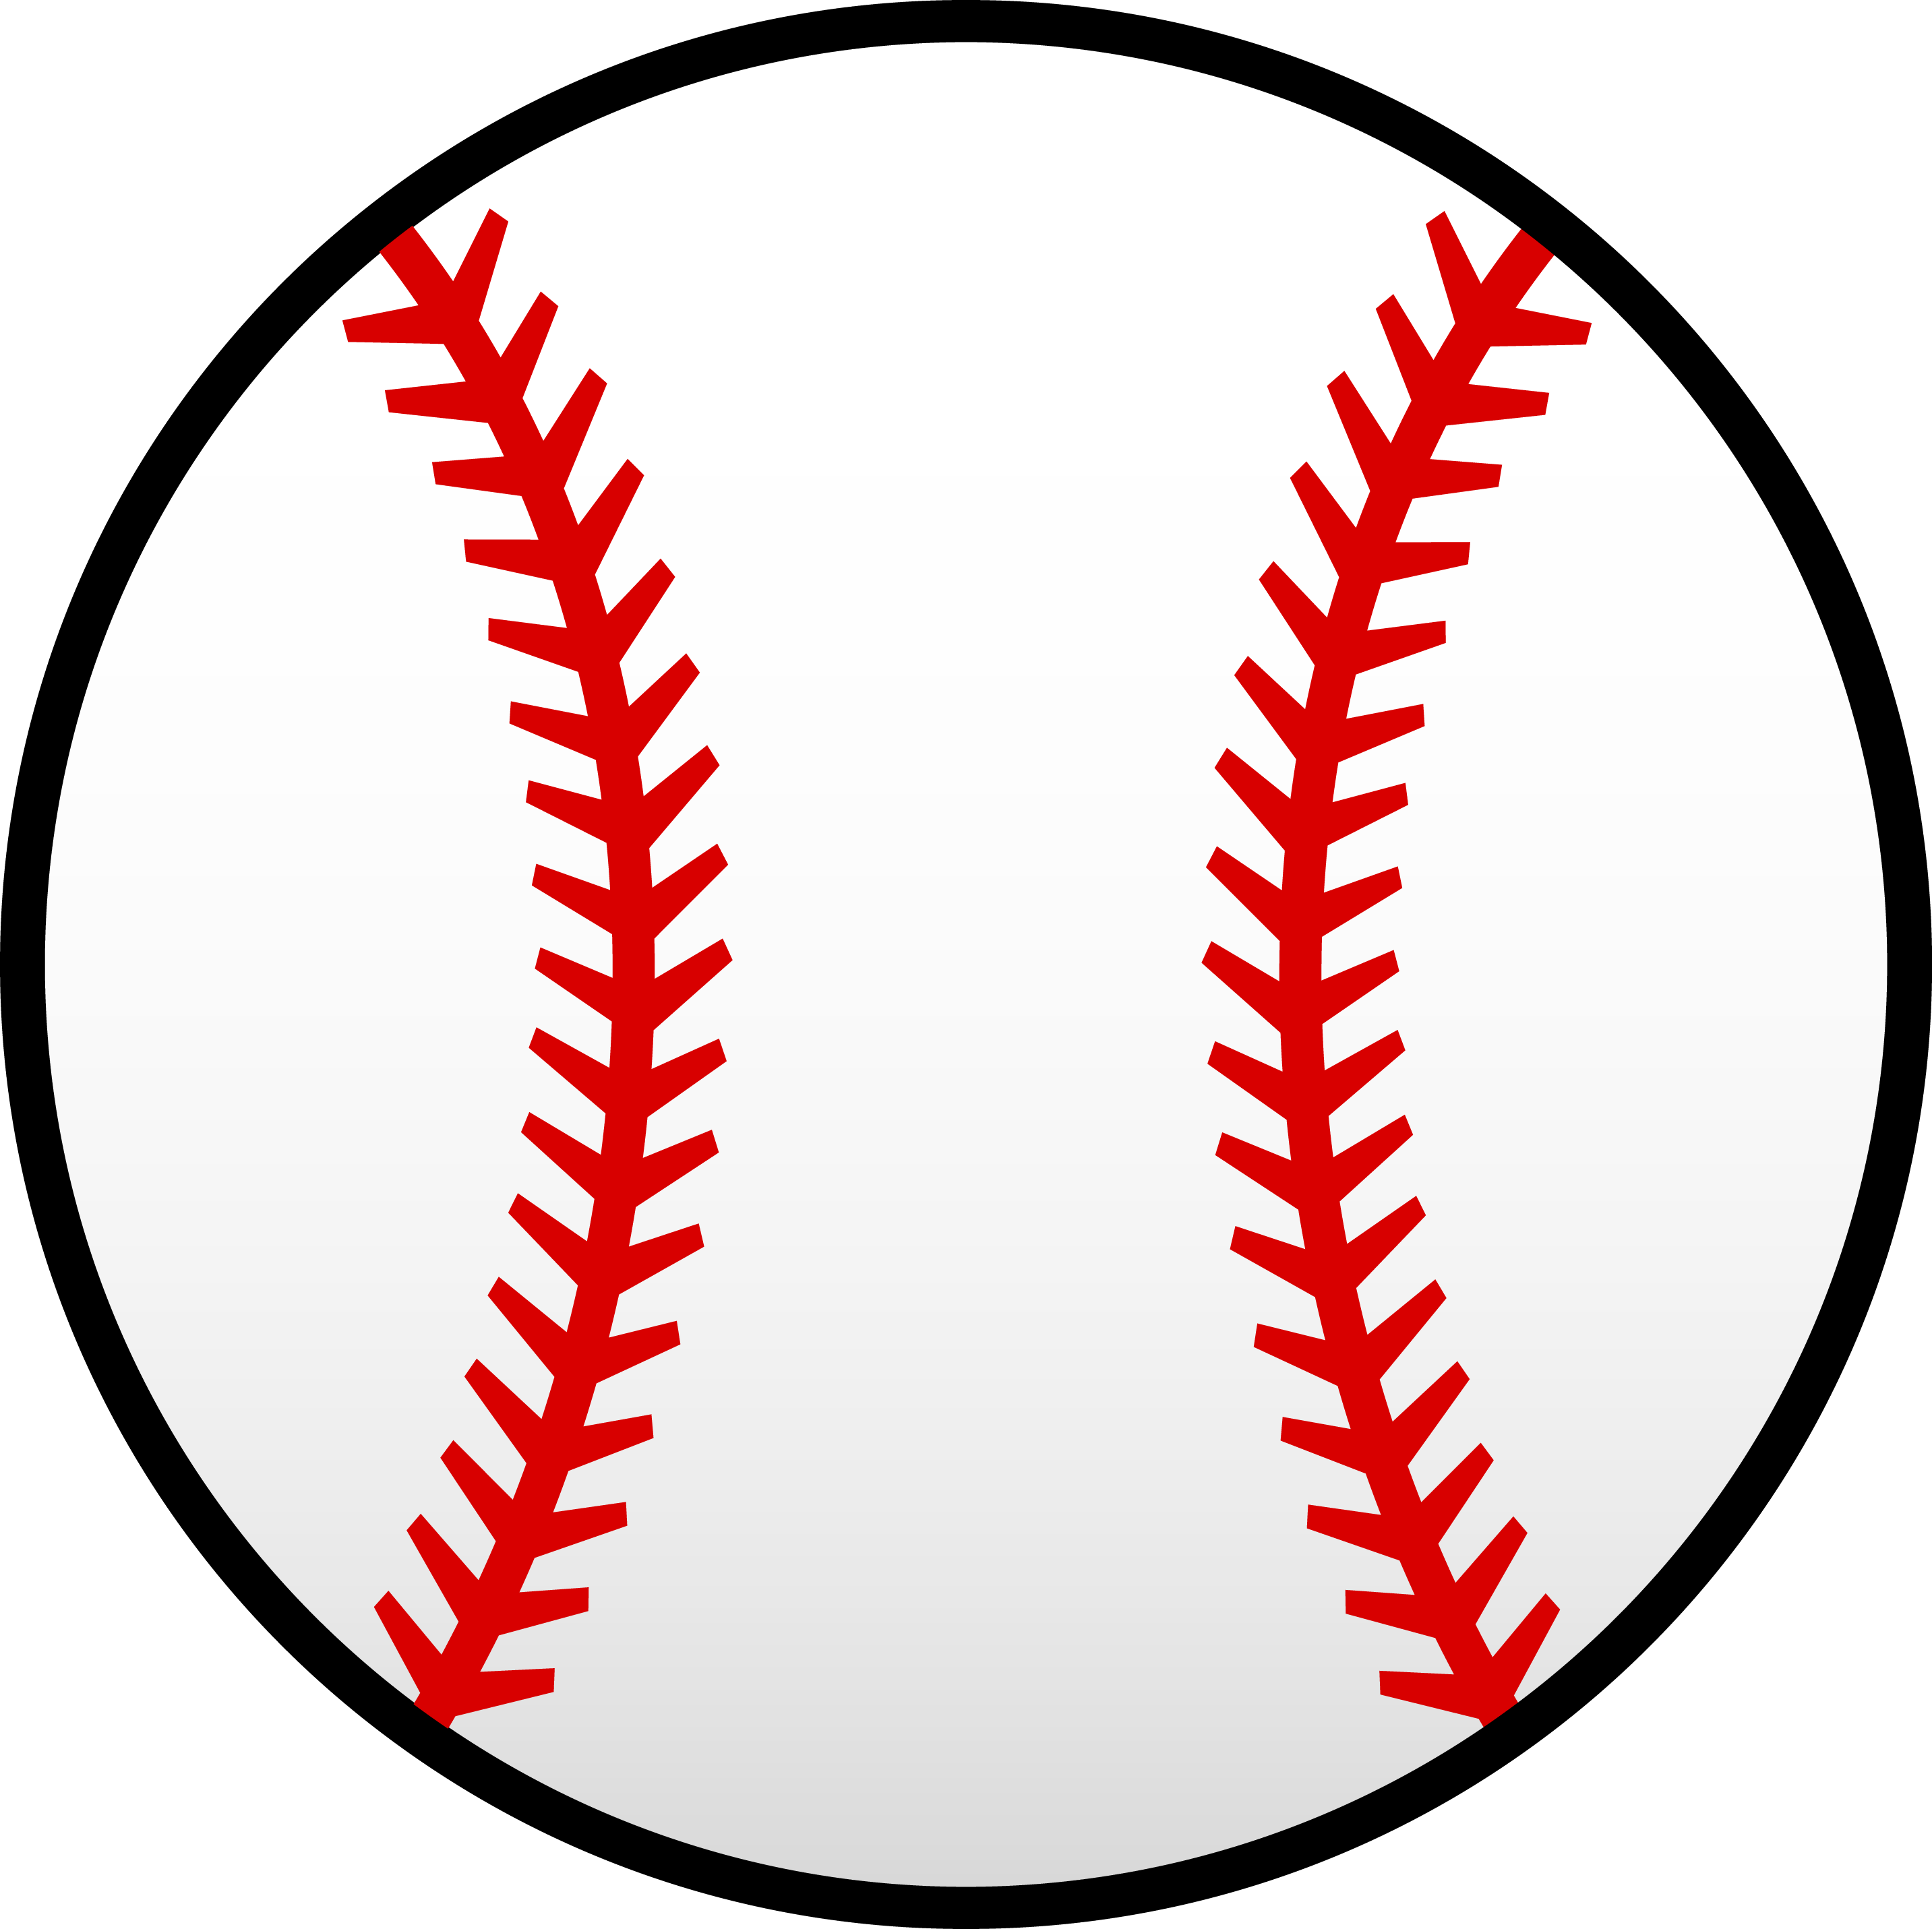 Baseball Graphic